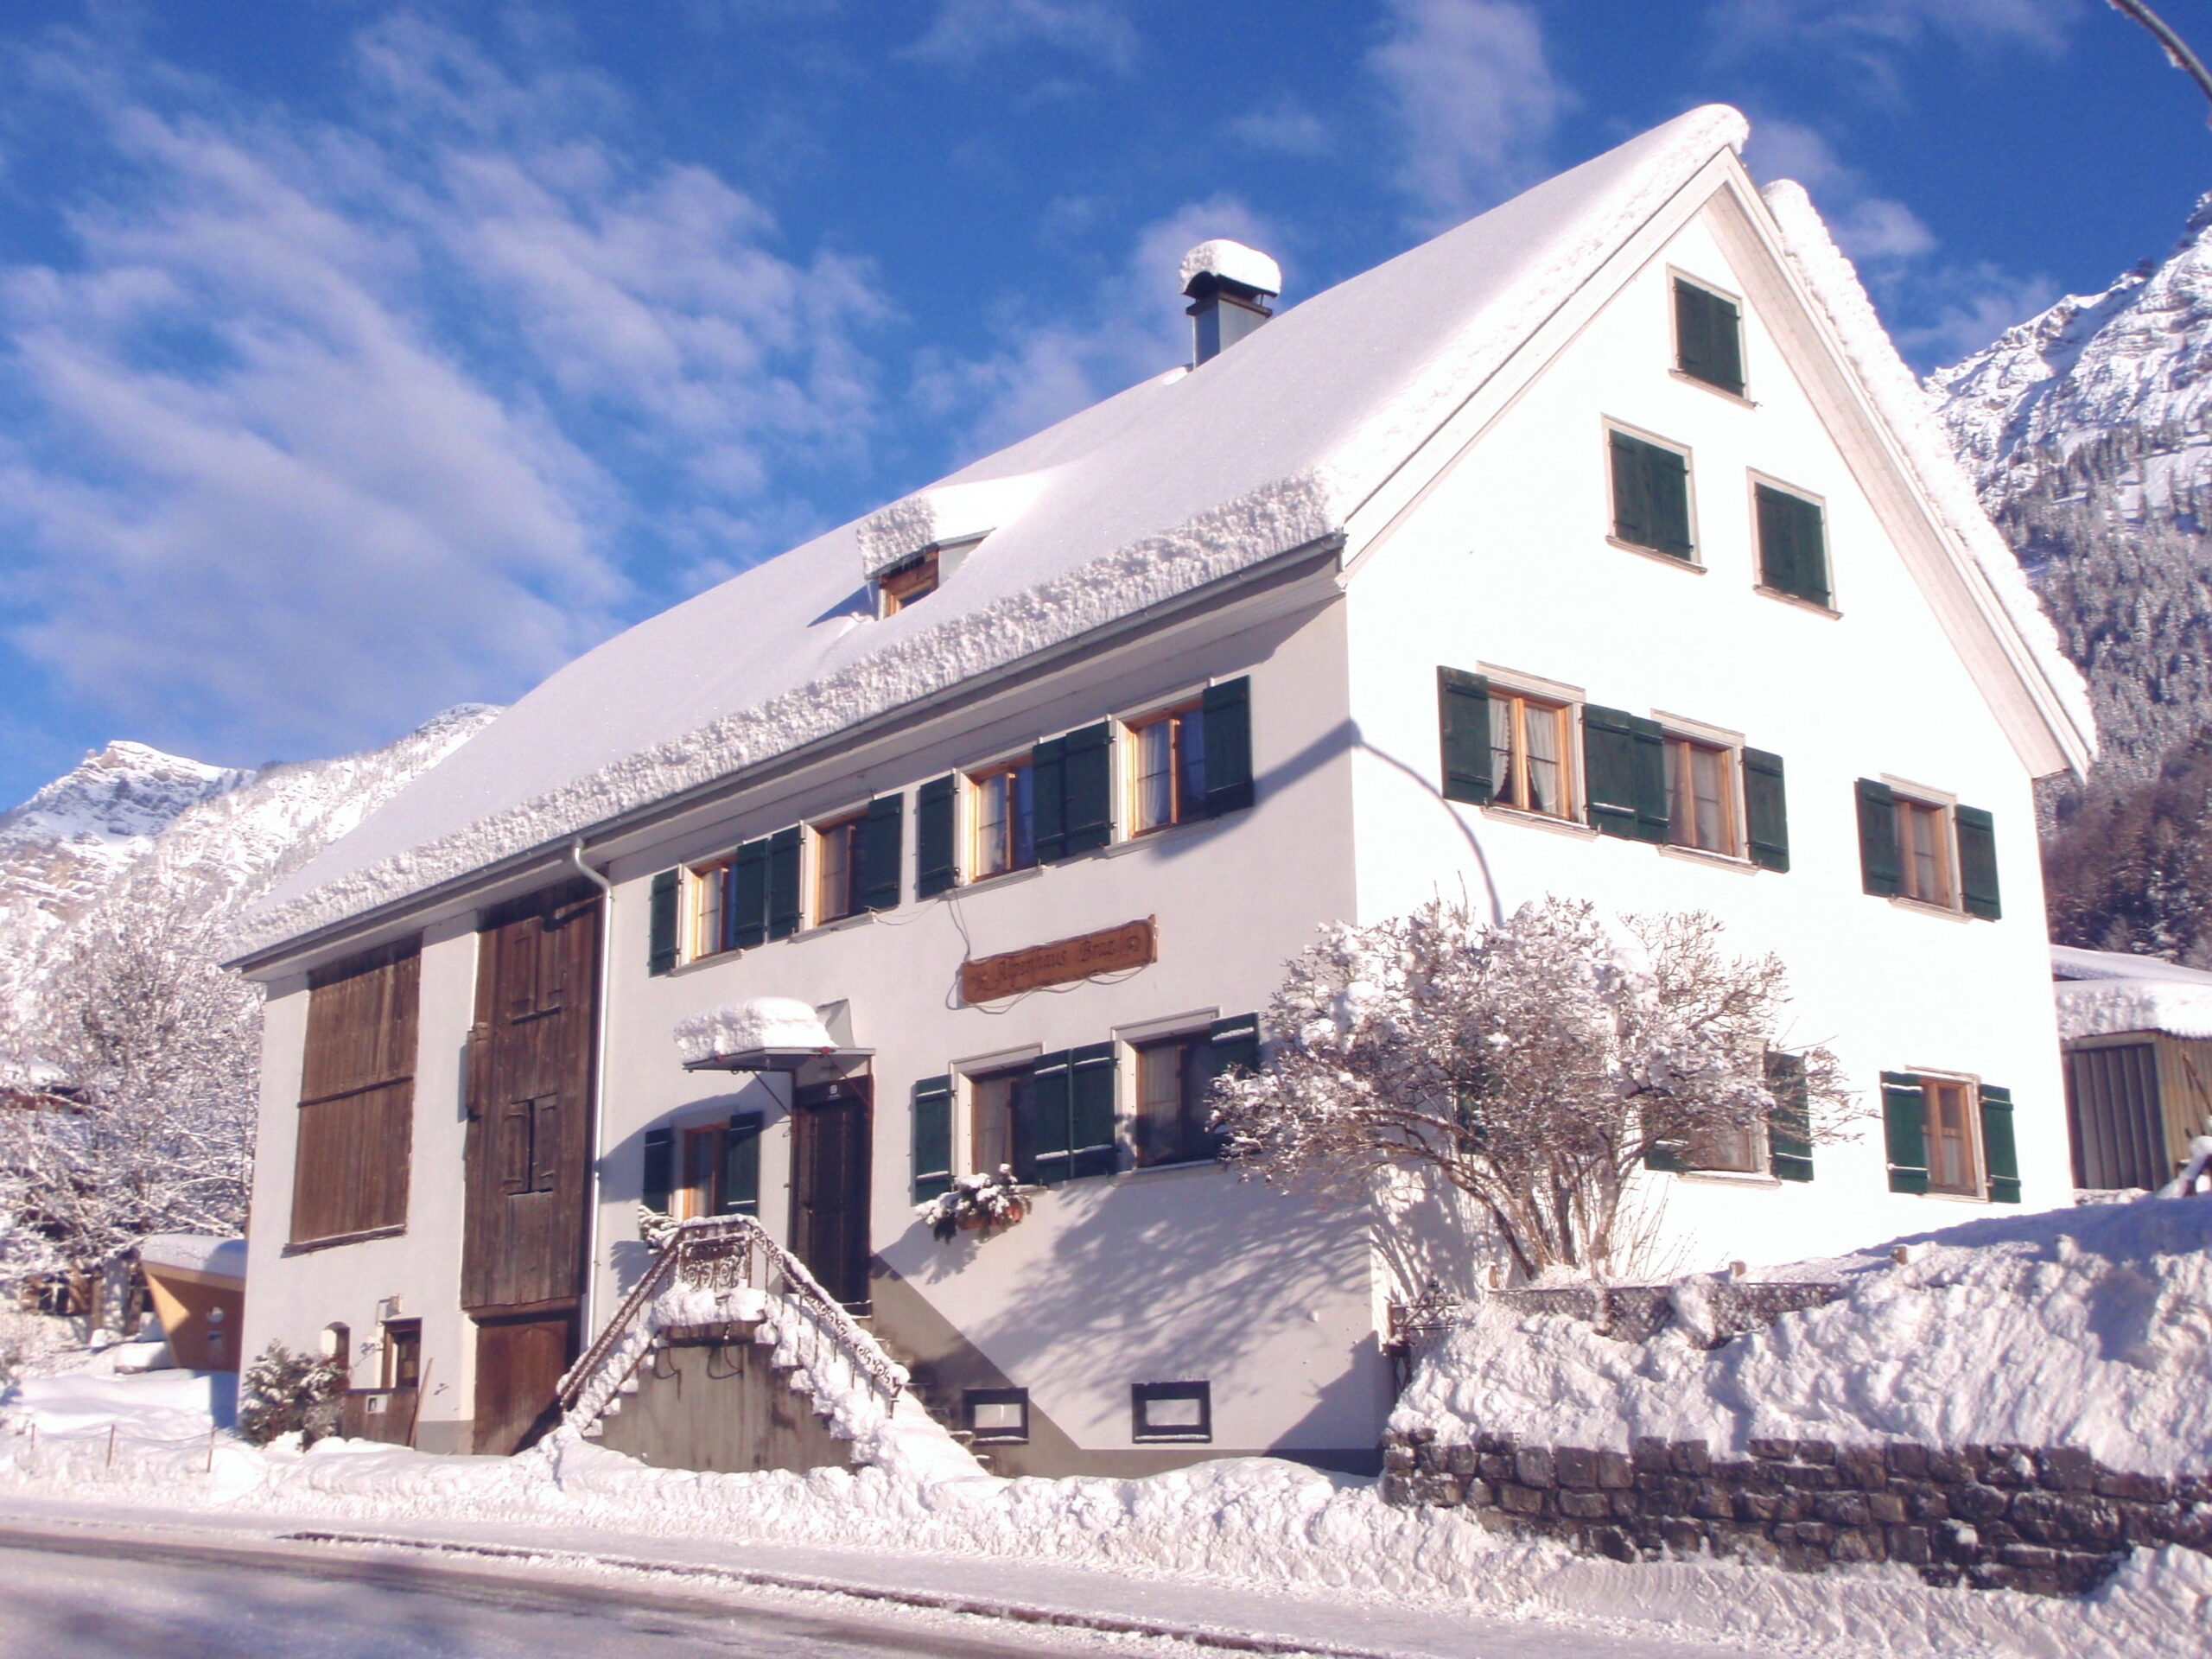 Ski Club Seedorf Winterurlaub Klostertal Rottweil Skiausfahrt